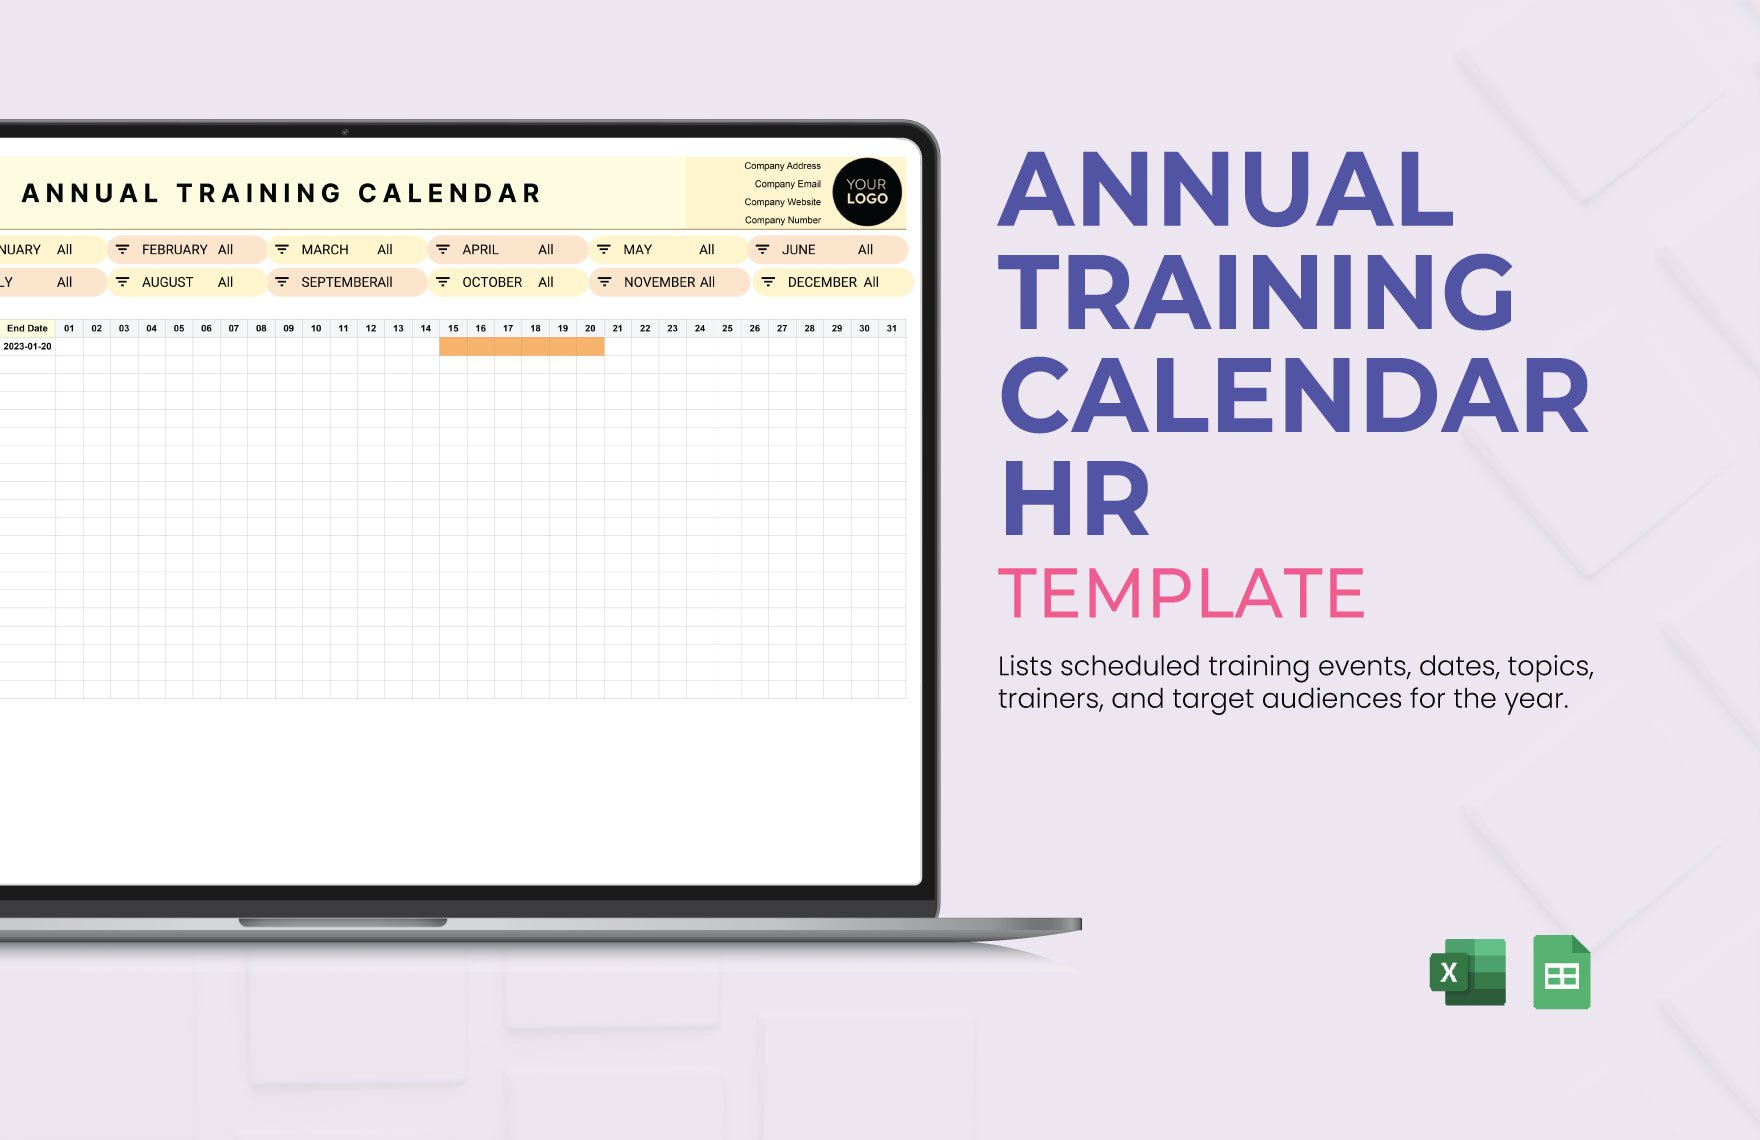 Annual Training Calendar HR Template